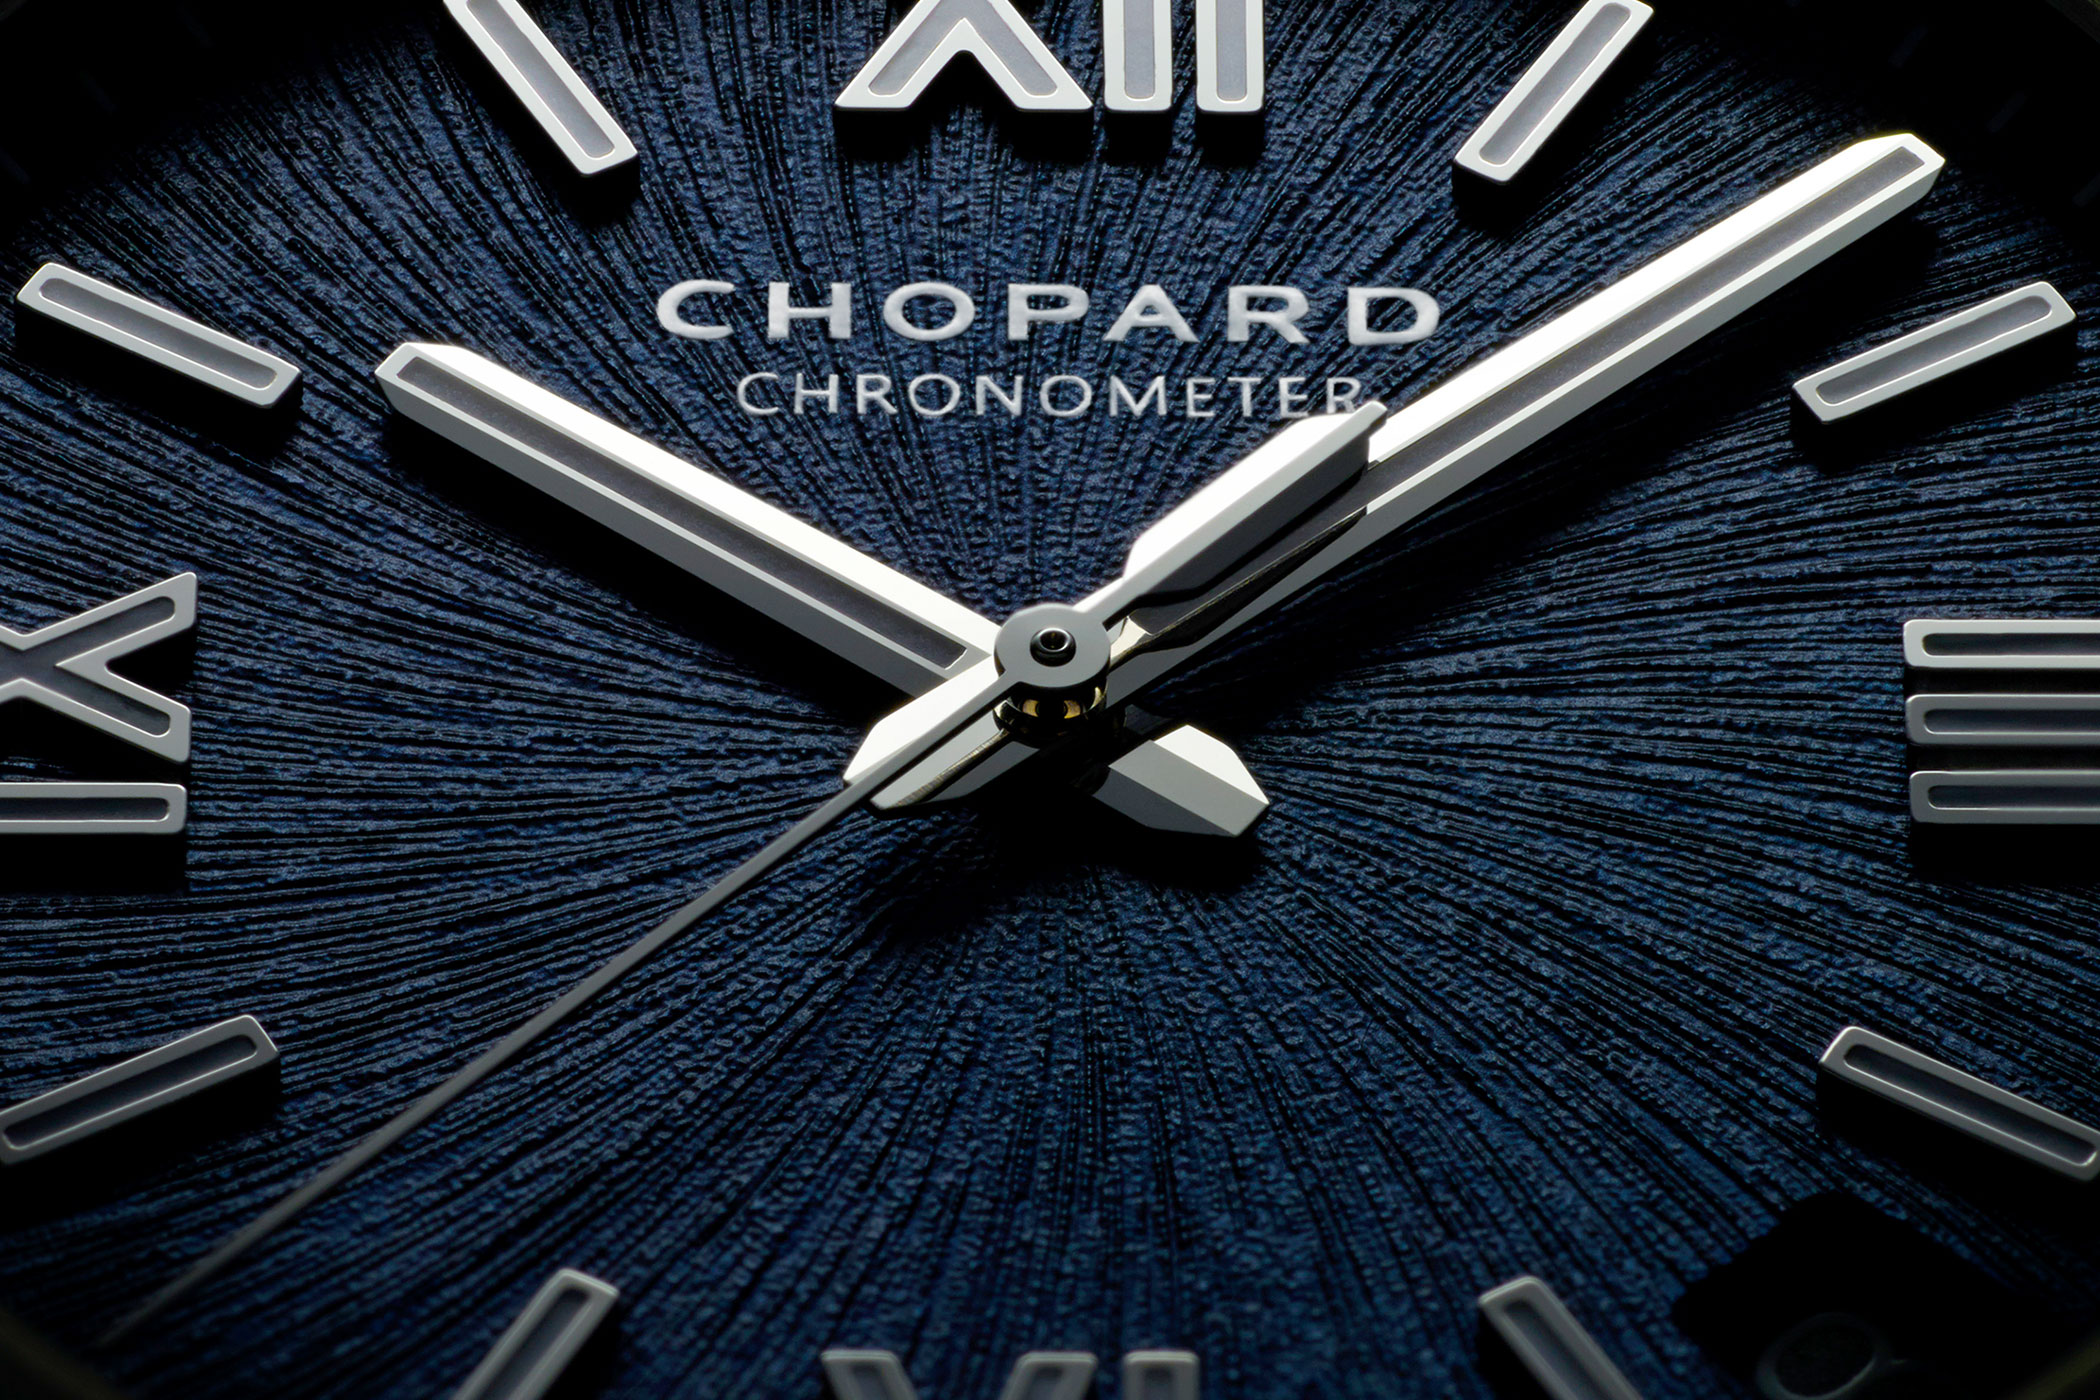 Introducing: Chopard Alpine Eagle XL Chrono With Maritime Blue Dial